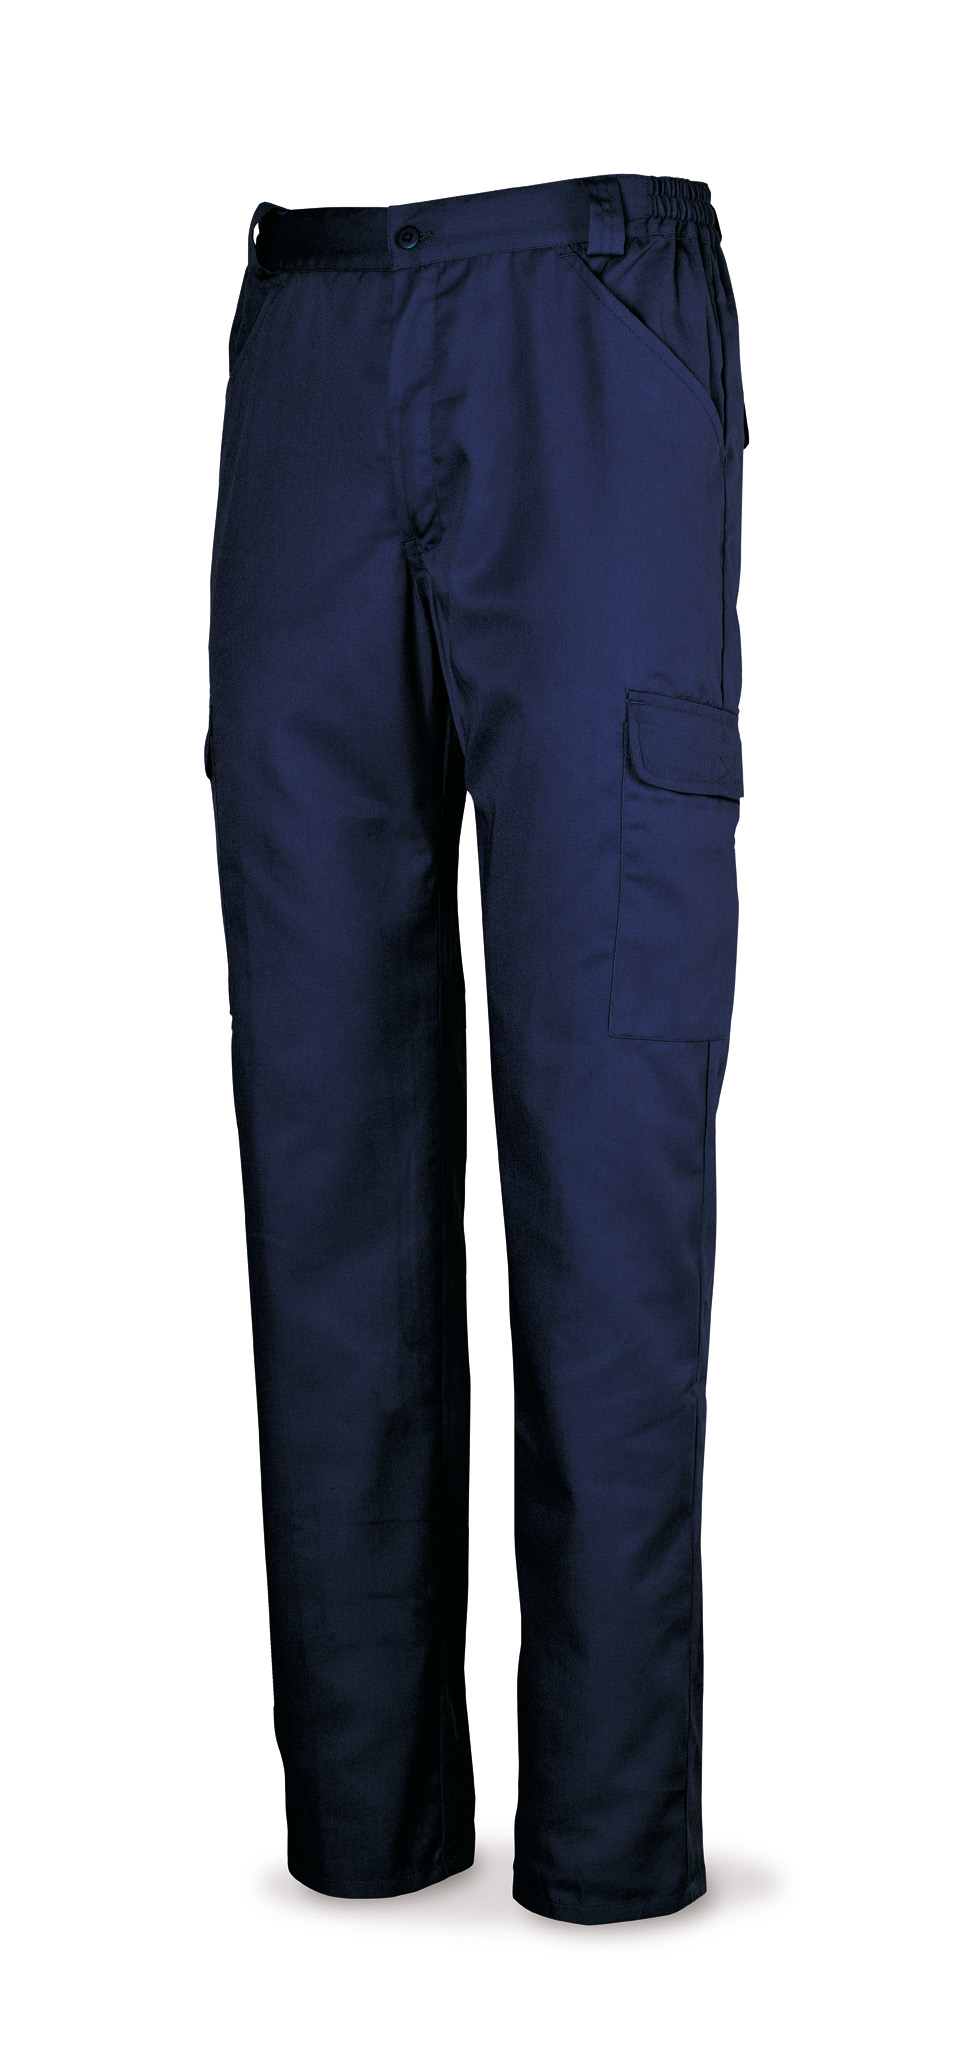 388-PEAM Workwear Basic Line Navy blue cotton pants 200 g. Multi-pockets.